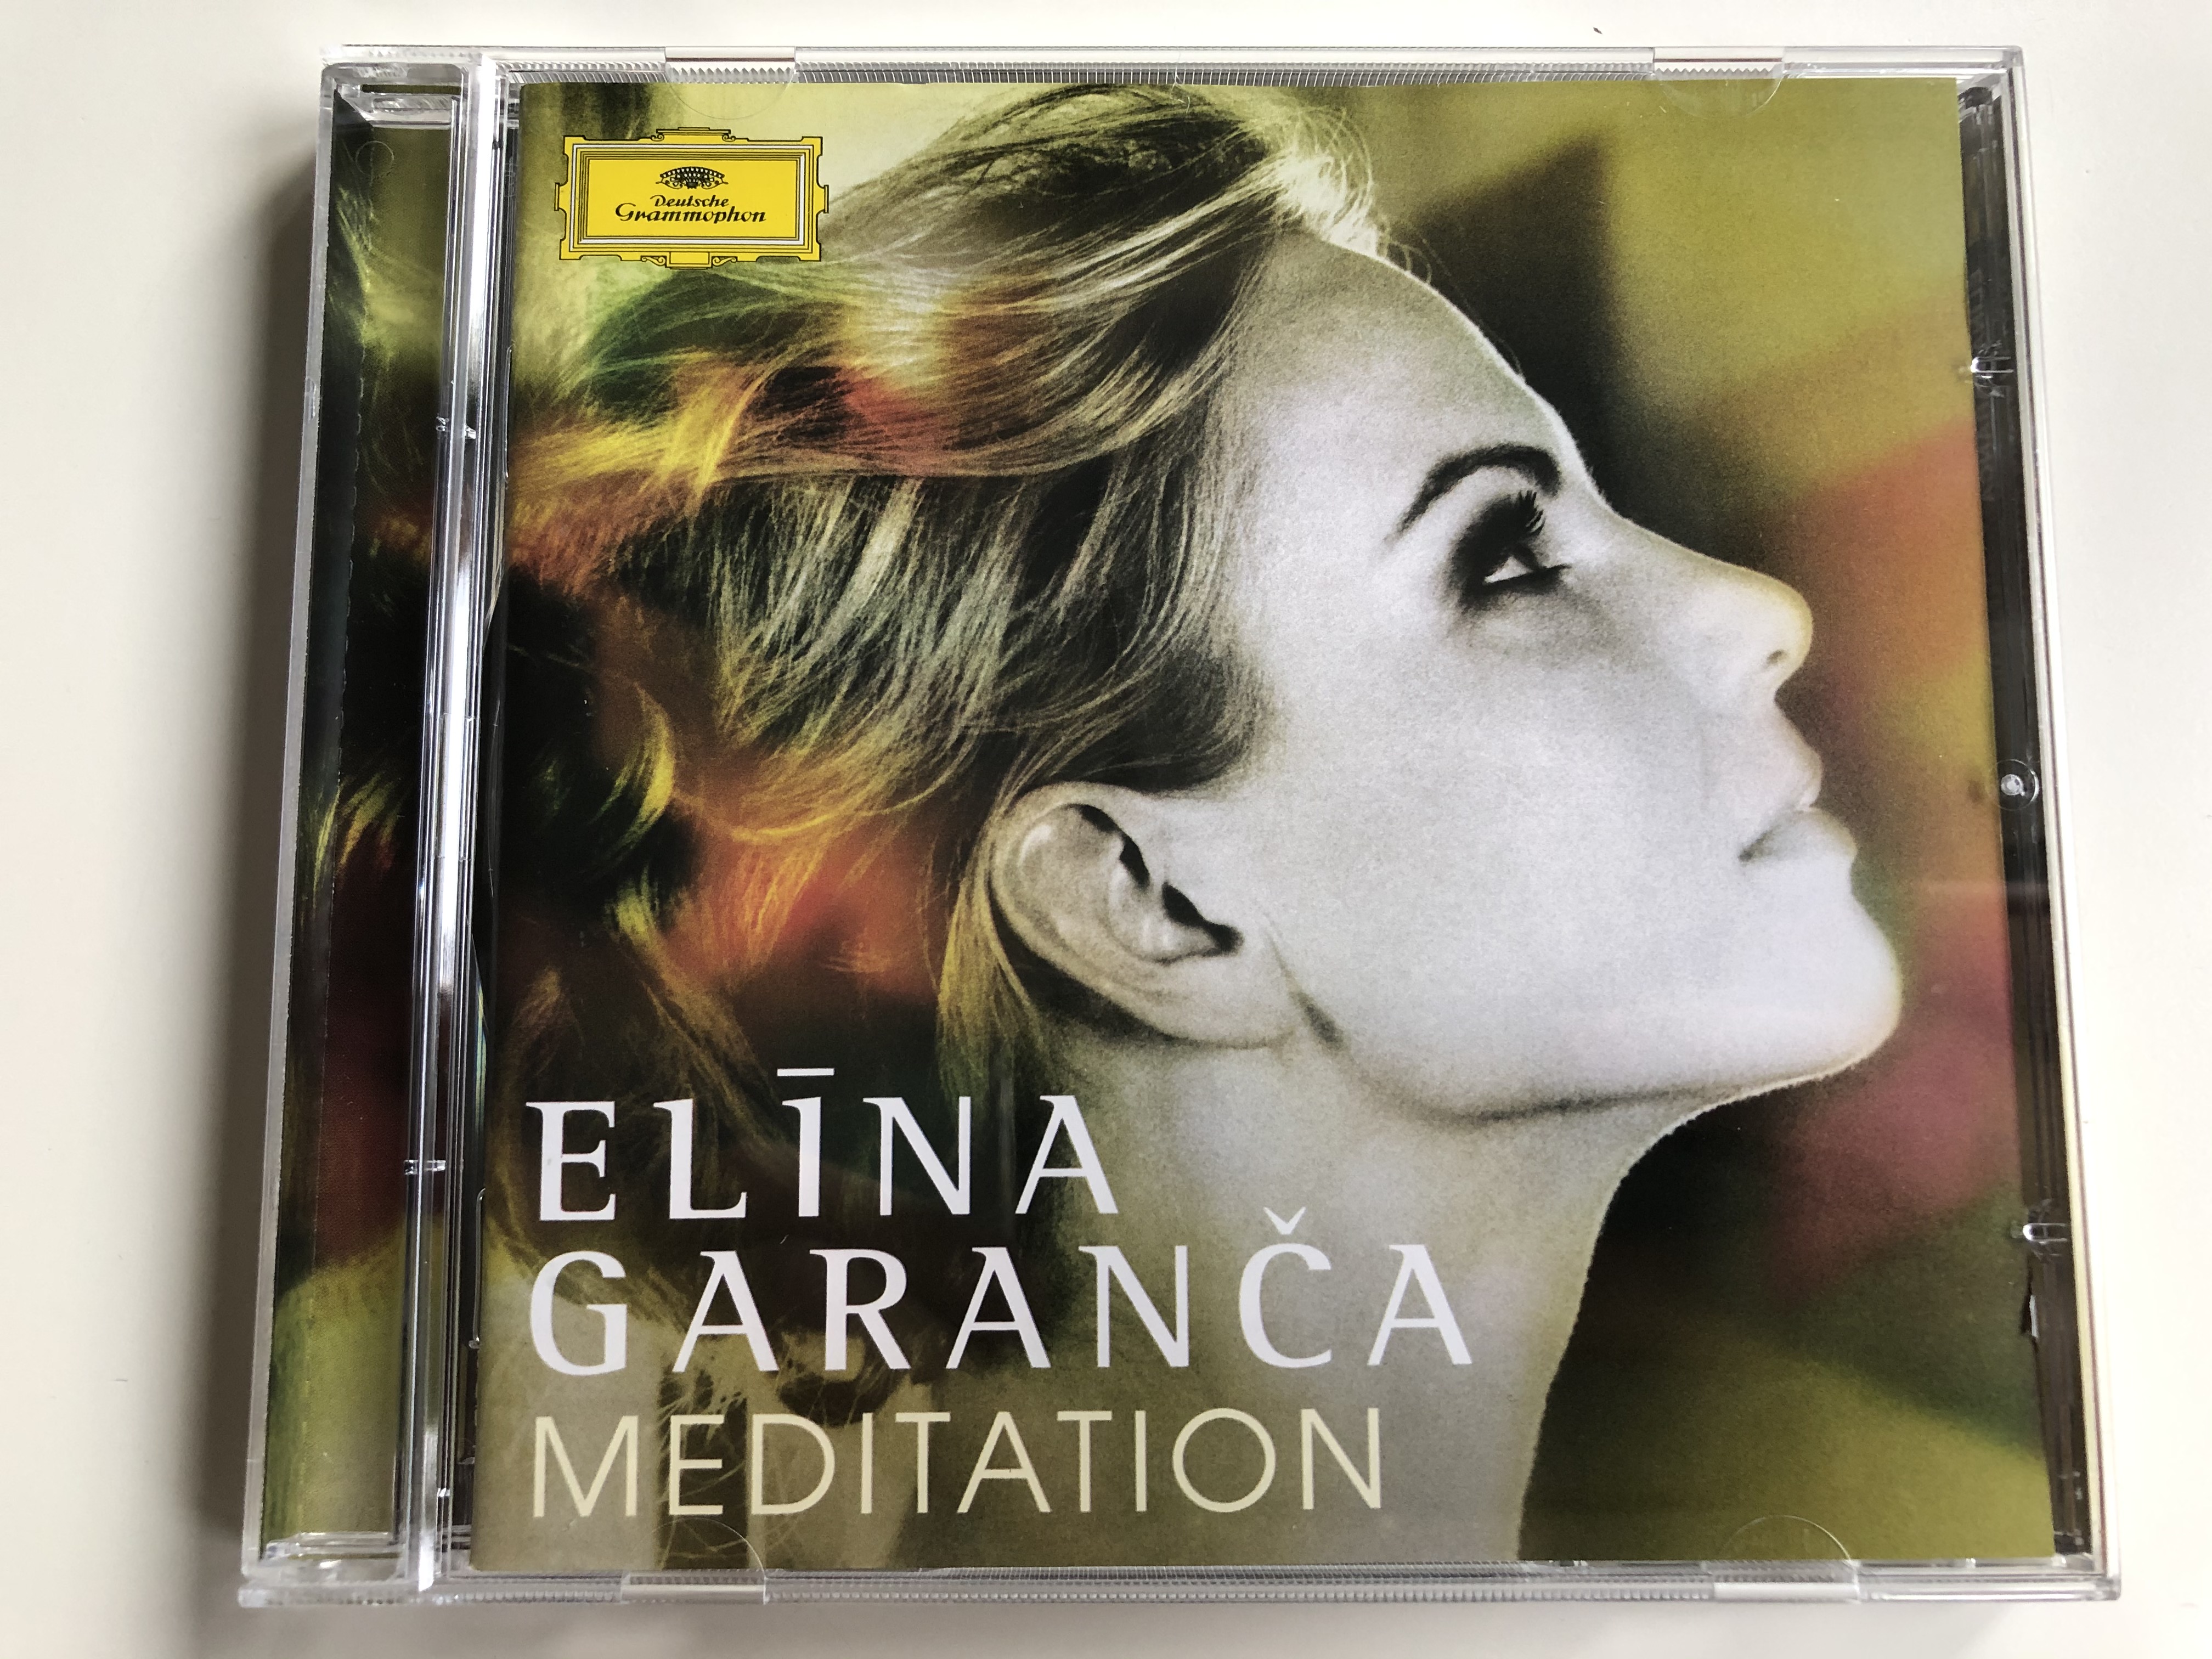 el-na-garan-a-meditation-deutsche-grammophon-audio-cd-2014-479-2071-1-.jpg